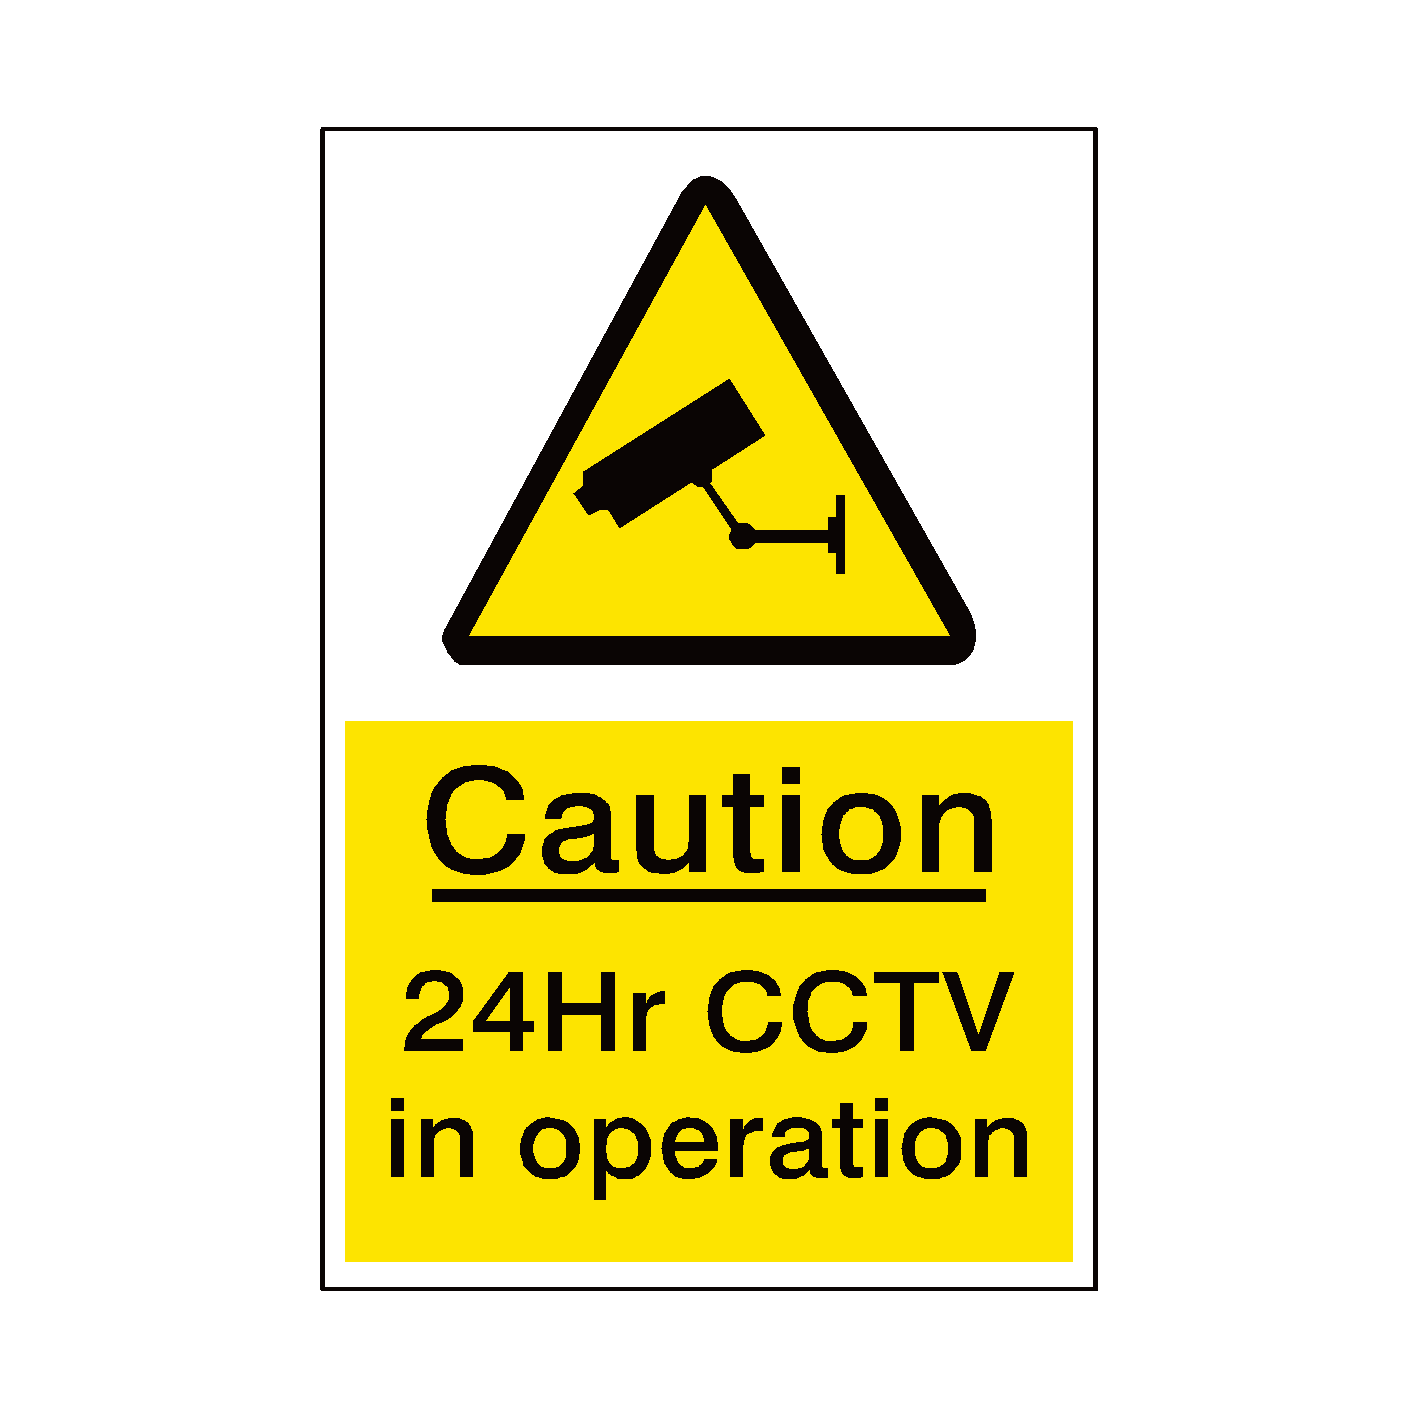 cctv sign